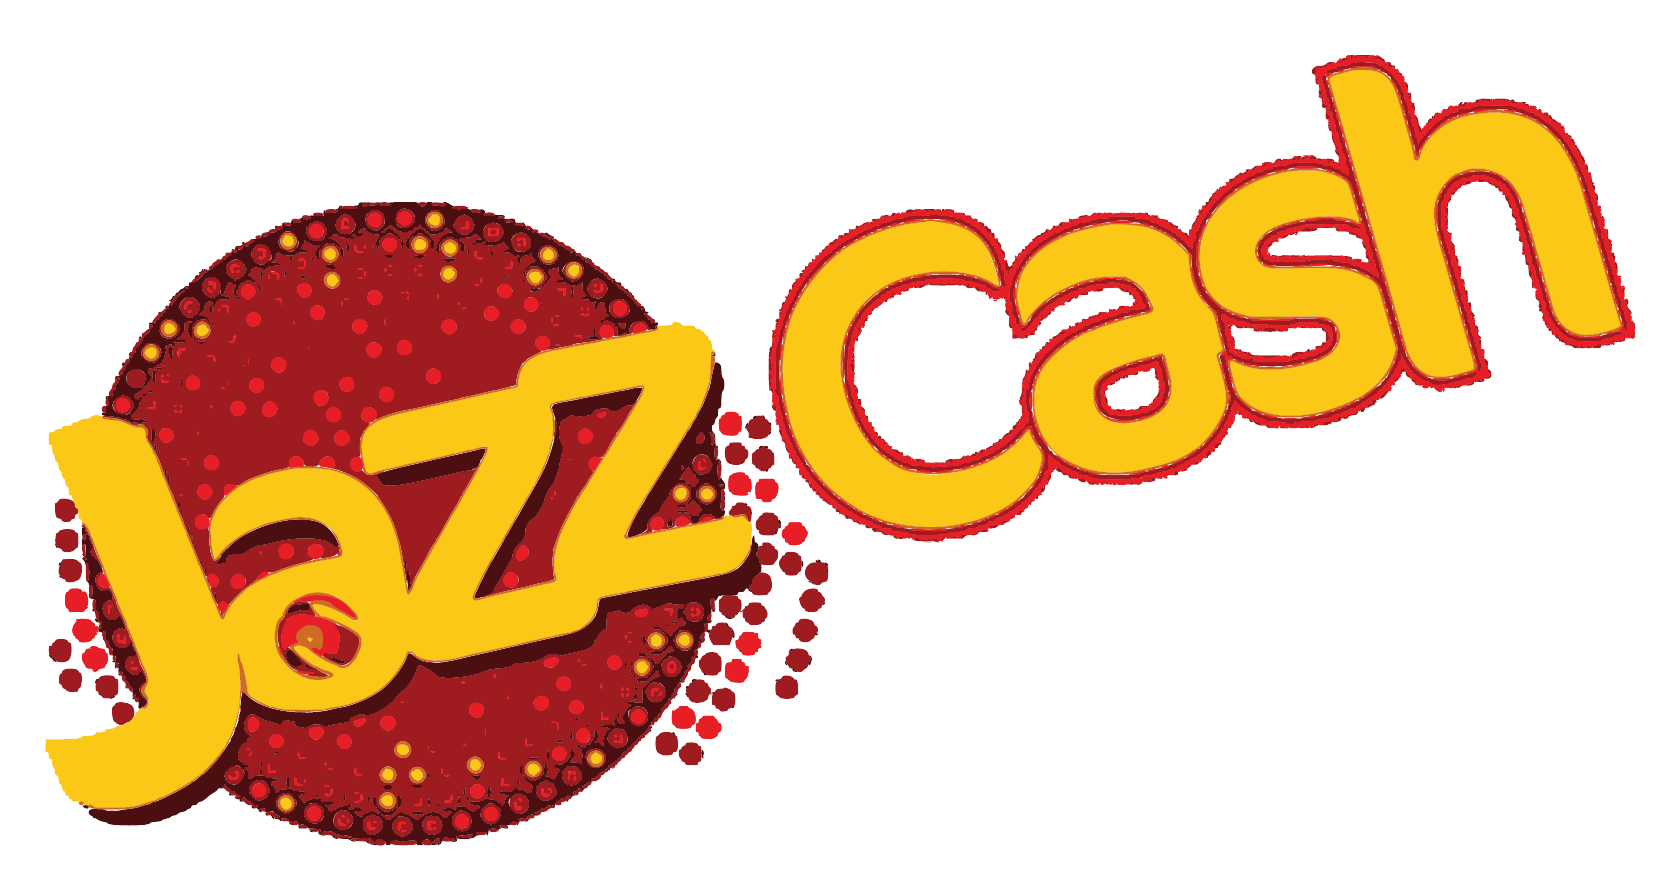 Jazz Cash Logo